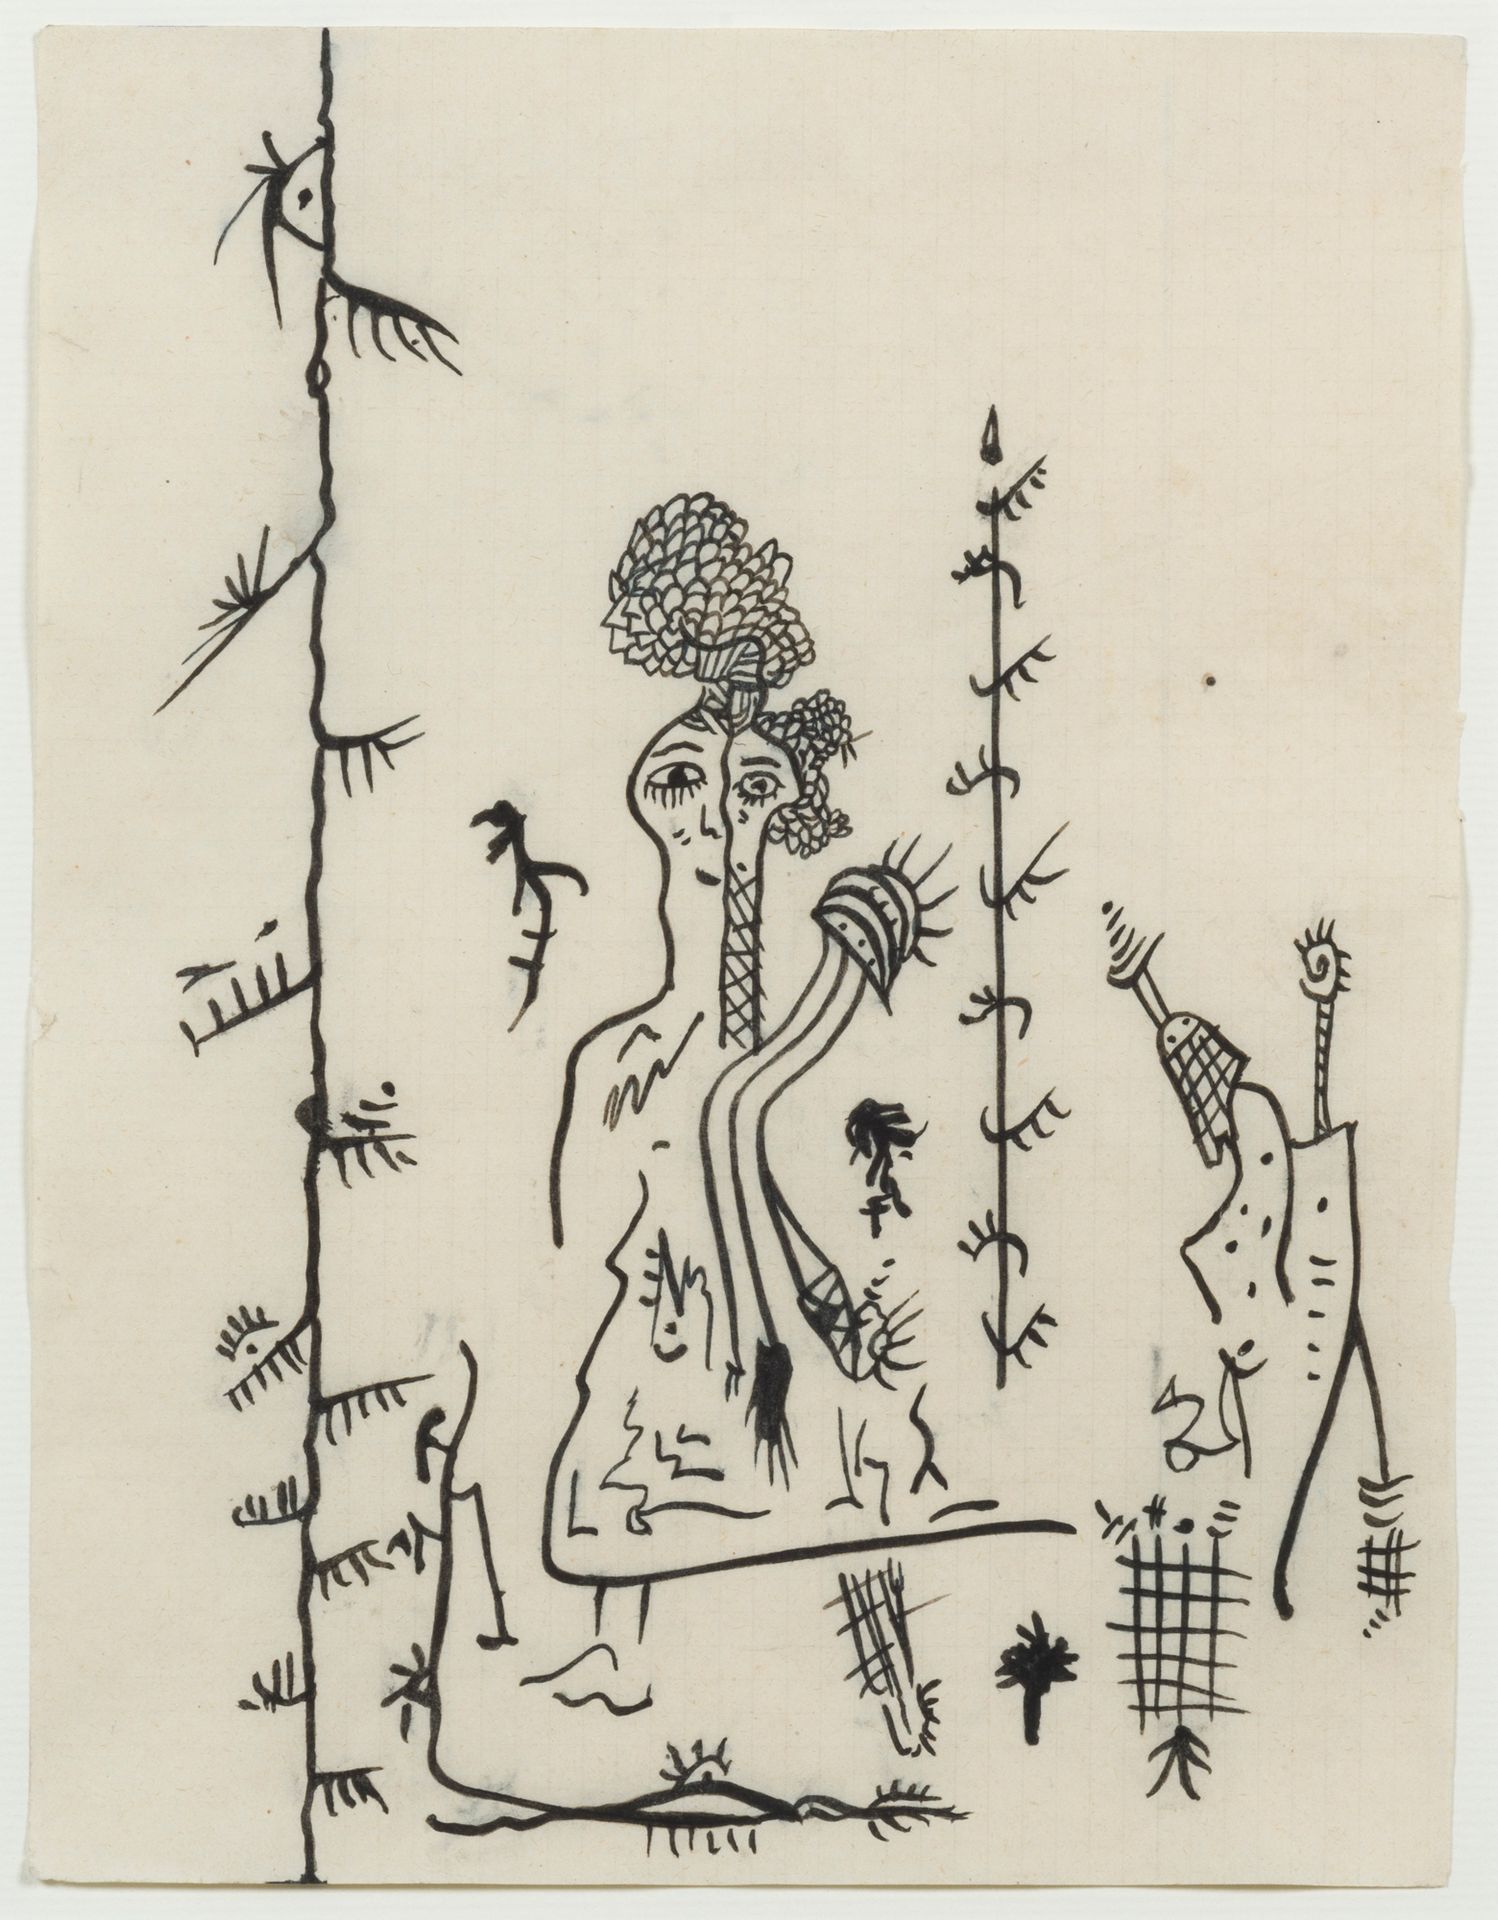 GASTON CHAISSAC (1910-64) 有人物的构图，1945-46。
纸上墨水。
在纸上。
22 x 16.8 cm
出处/Herkomst:
私&hellip;